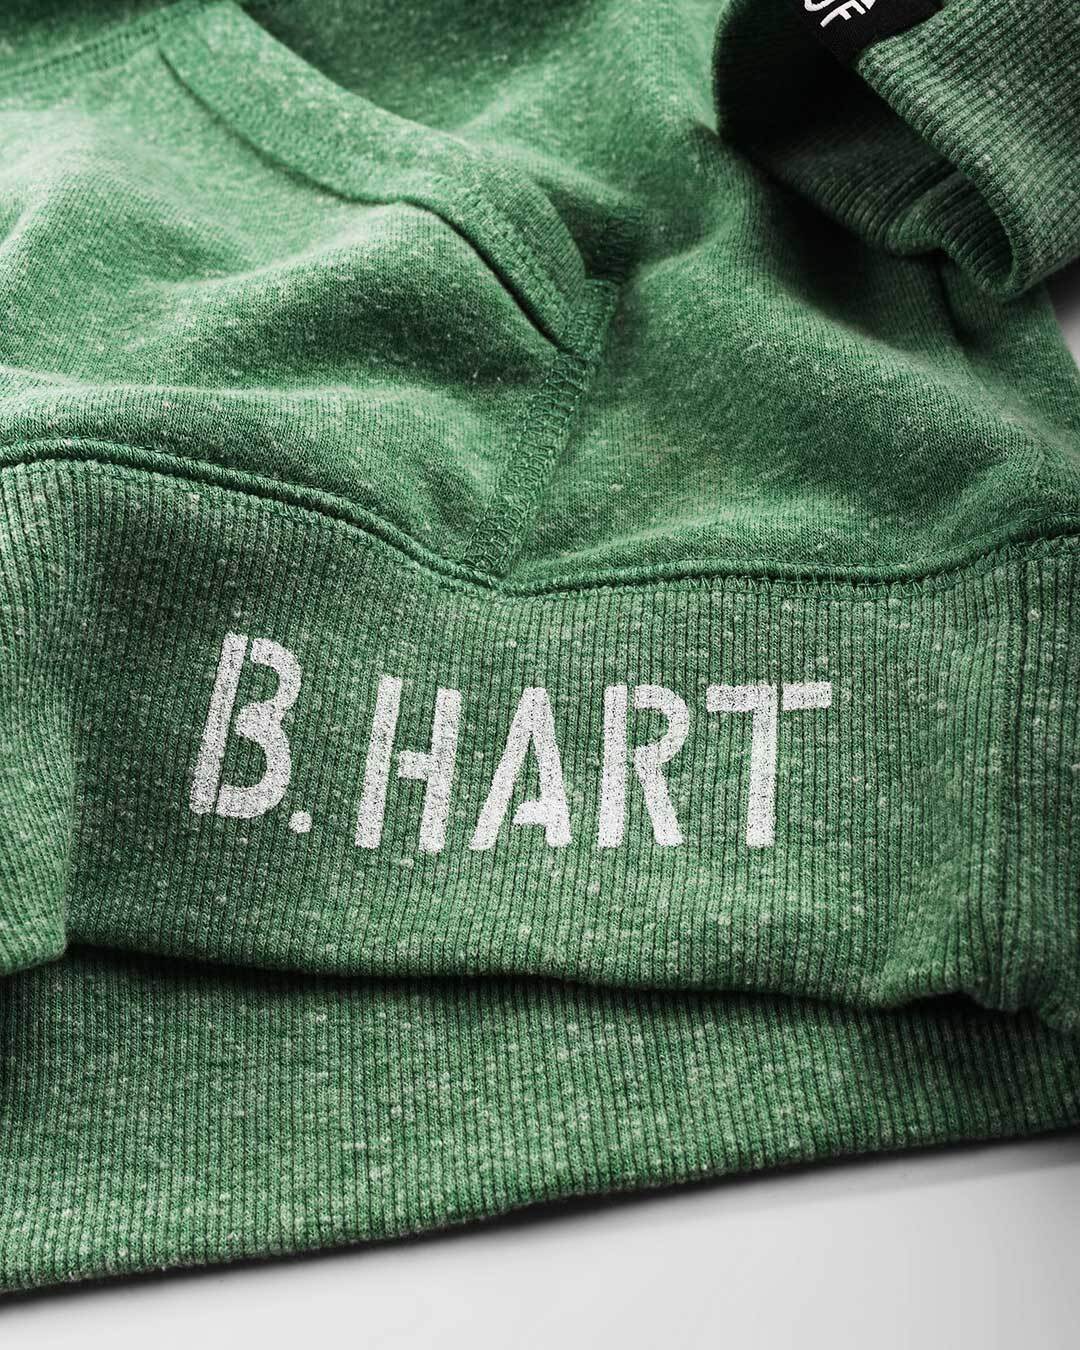 Bret Hart Hitman Classic Green PO Hoody - Roots of Fight